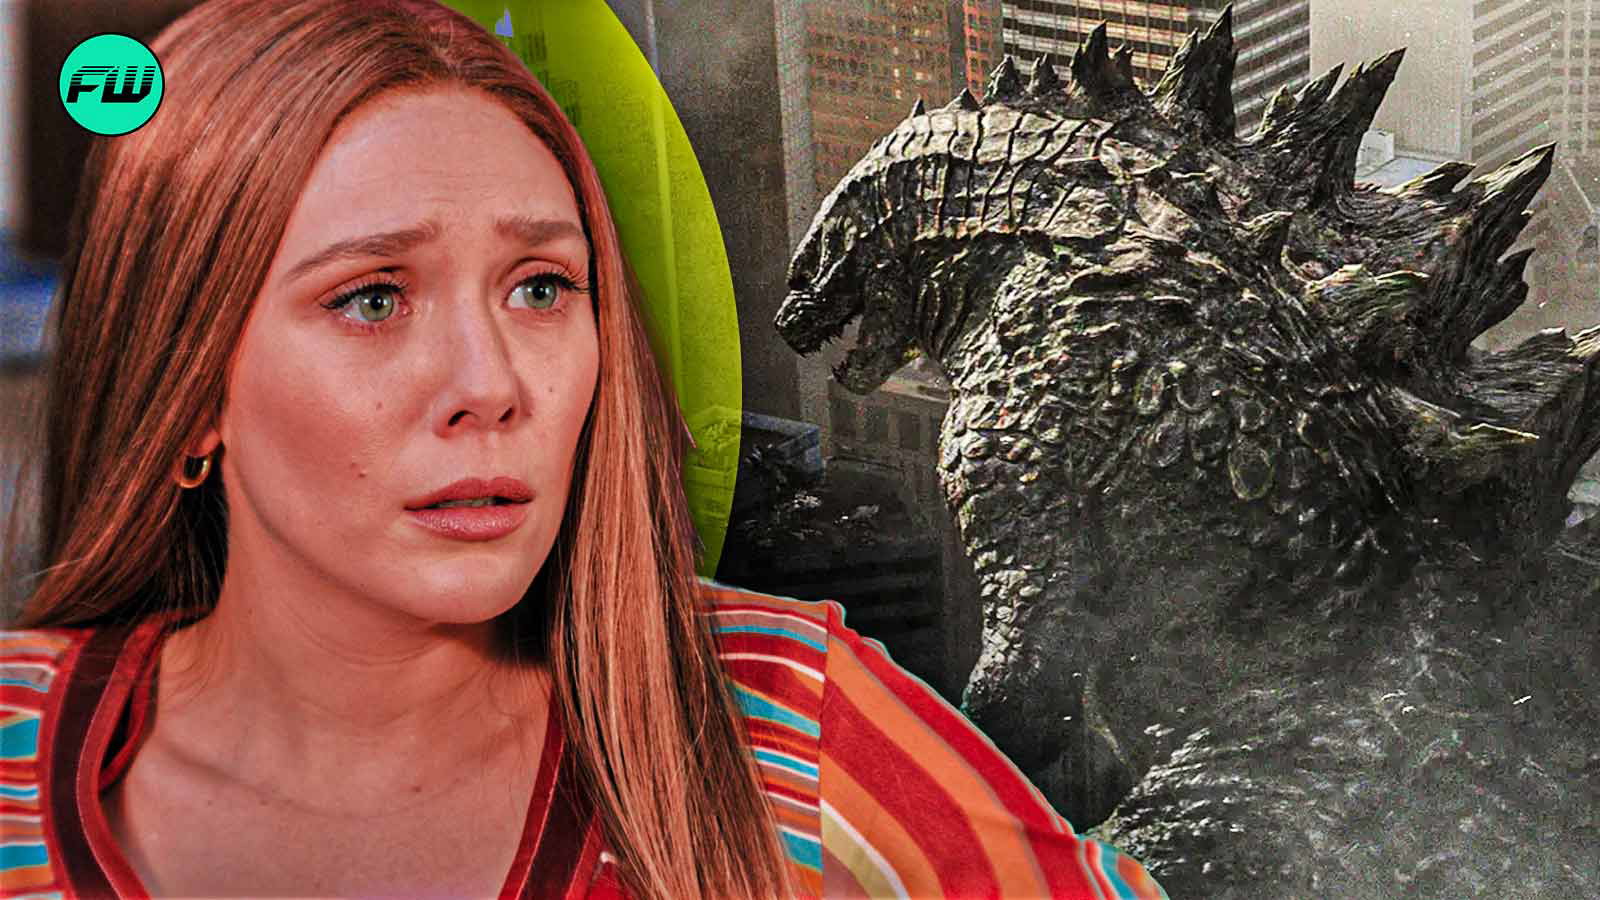 Elizabeth Olsen and Godzilla